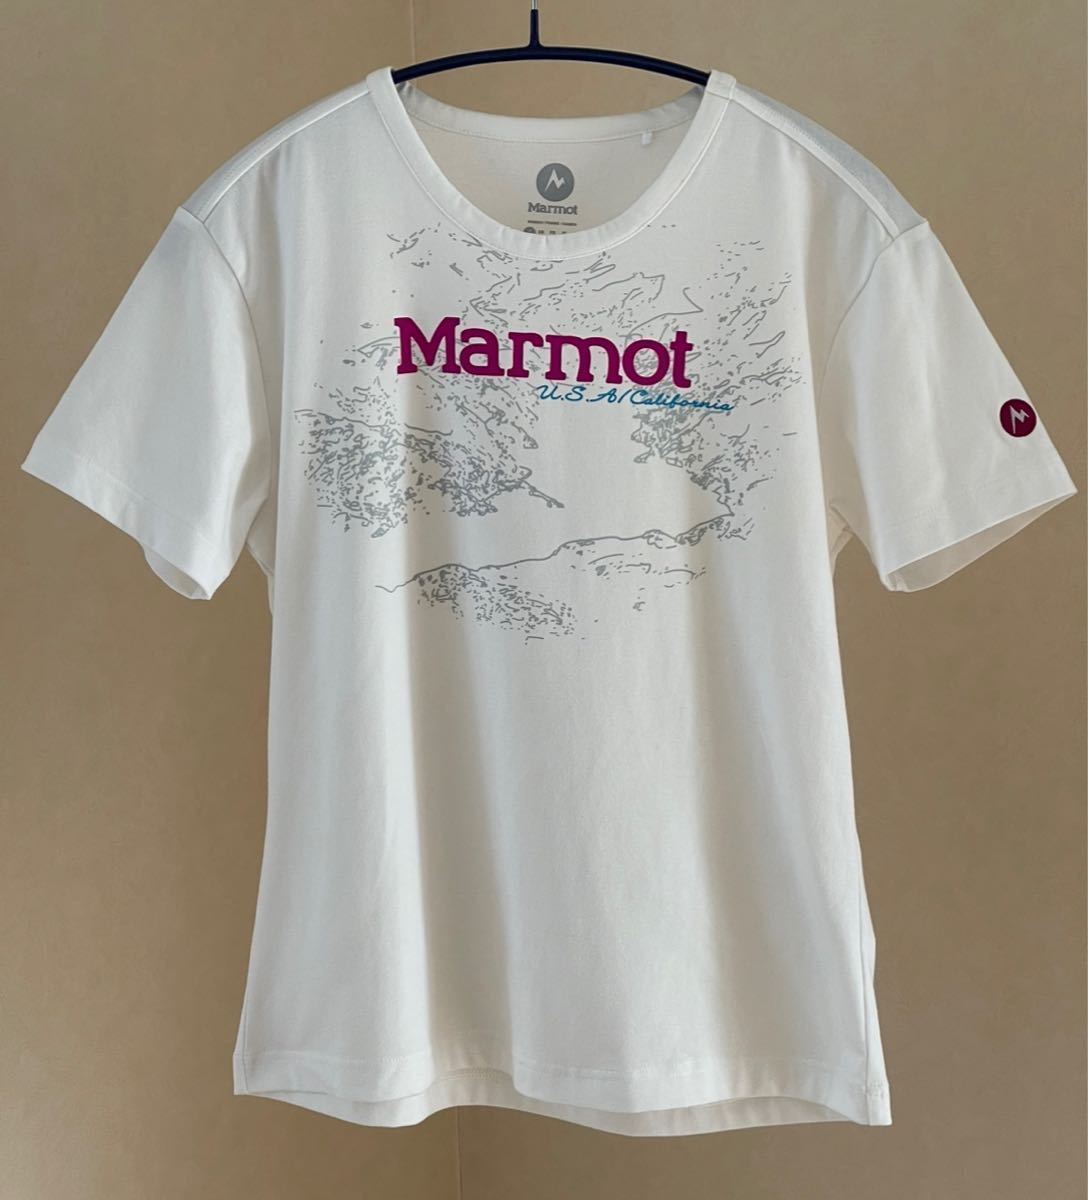  super-beauty goods Marmot( Marmot ) lady's short sleeves shirt M(T160cm) use 3 times white outdoor sport gran pin g( stock ) Descente 